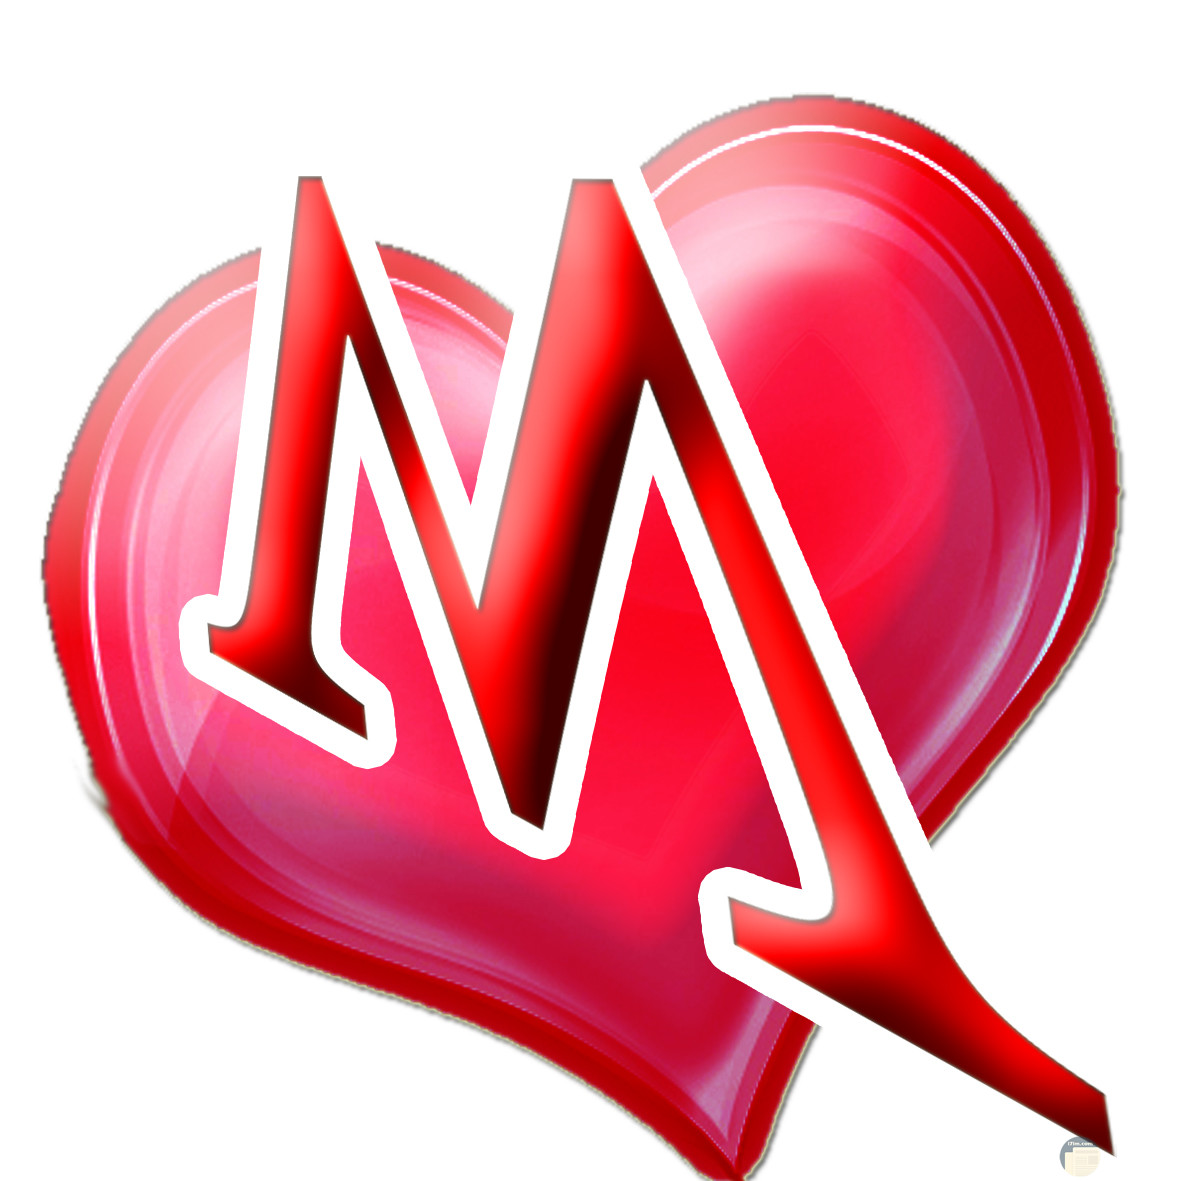 حرف M داخل قلب أحمر